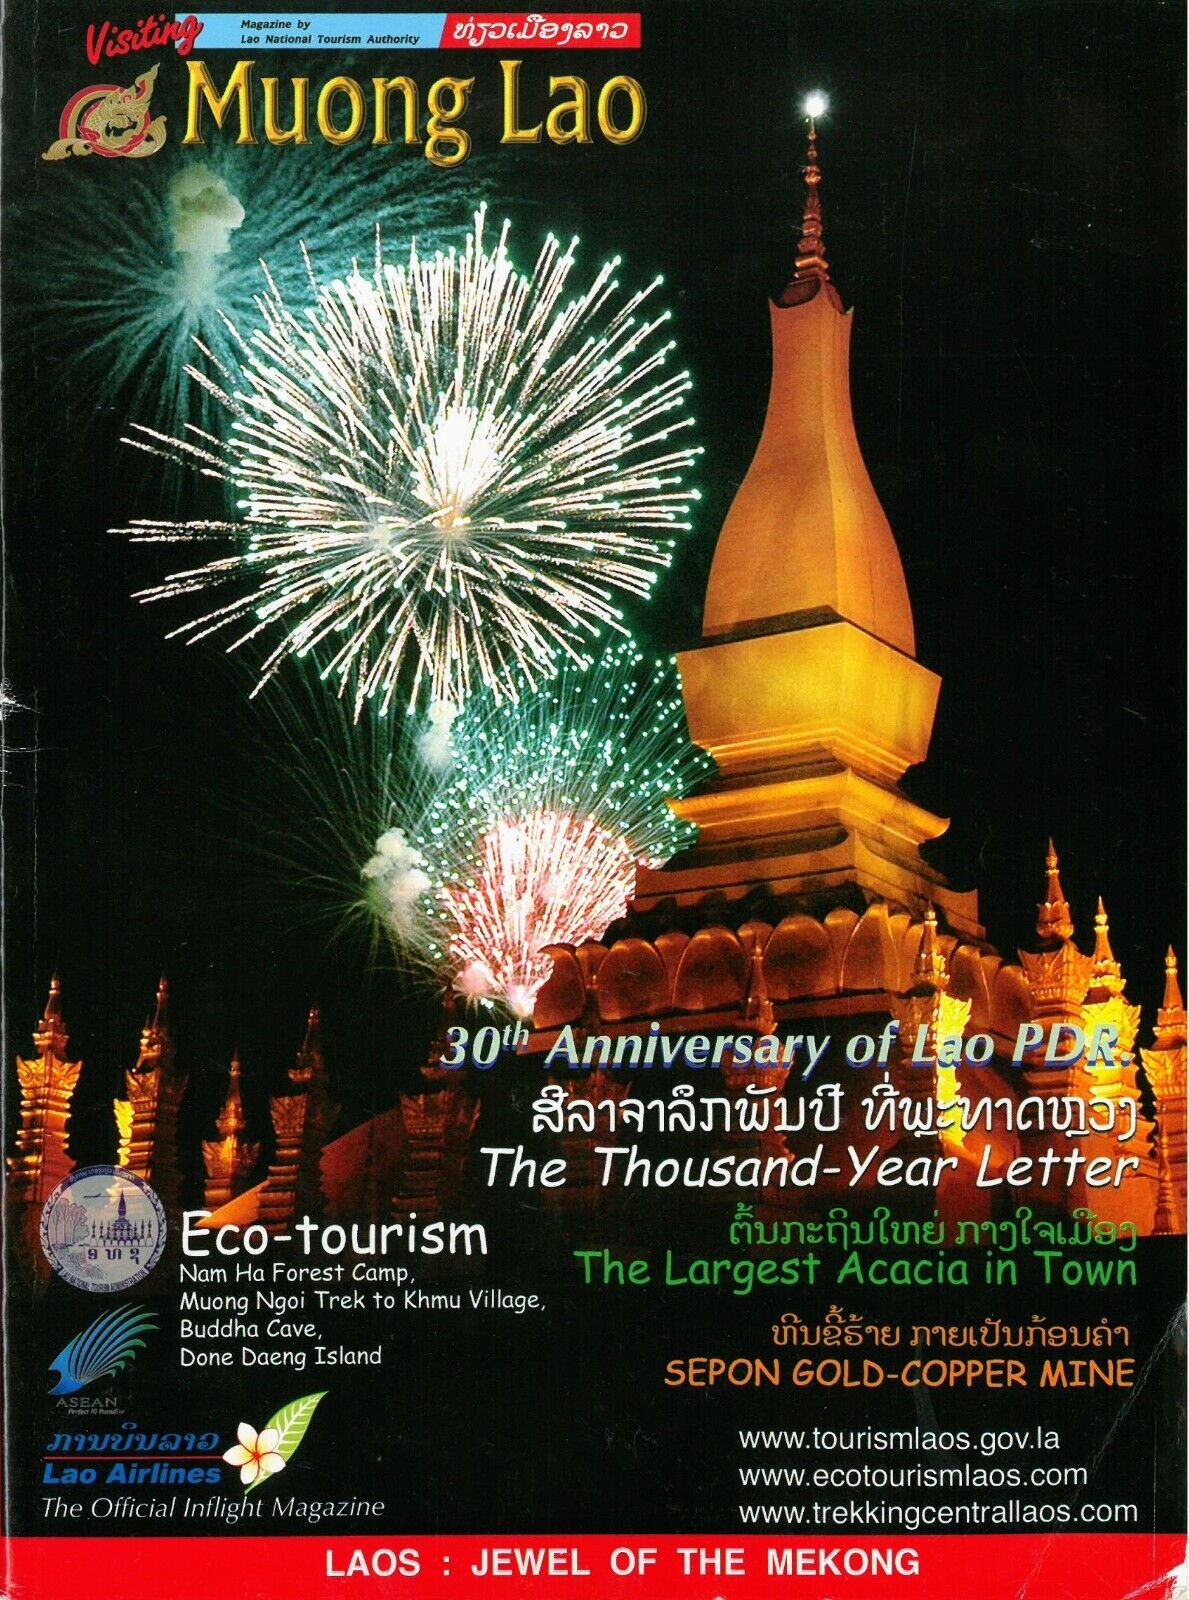 LAO AVIATION - Inflight Magazine - Jan/Feb 2006 Muong Lao Laos 30th Anniversary